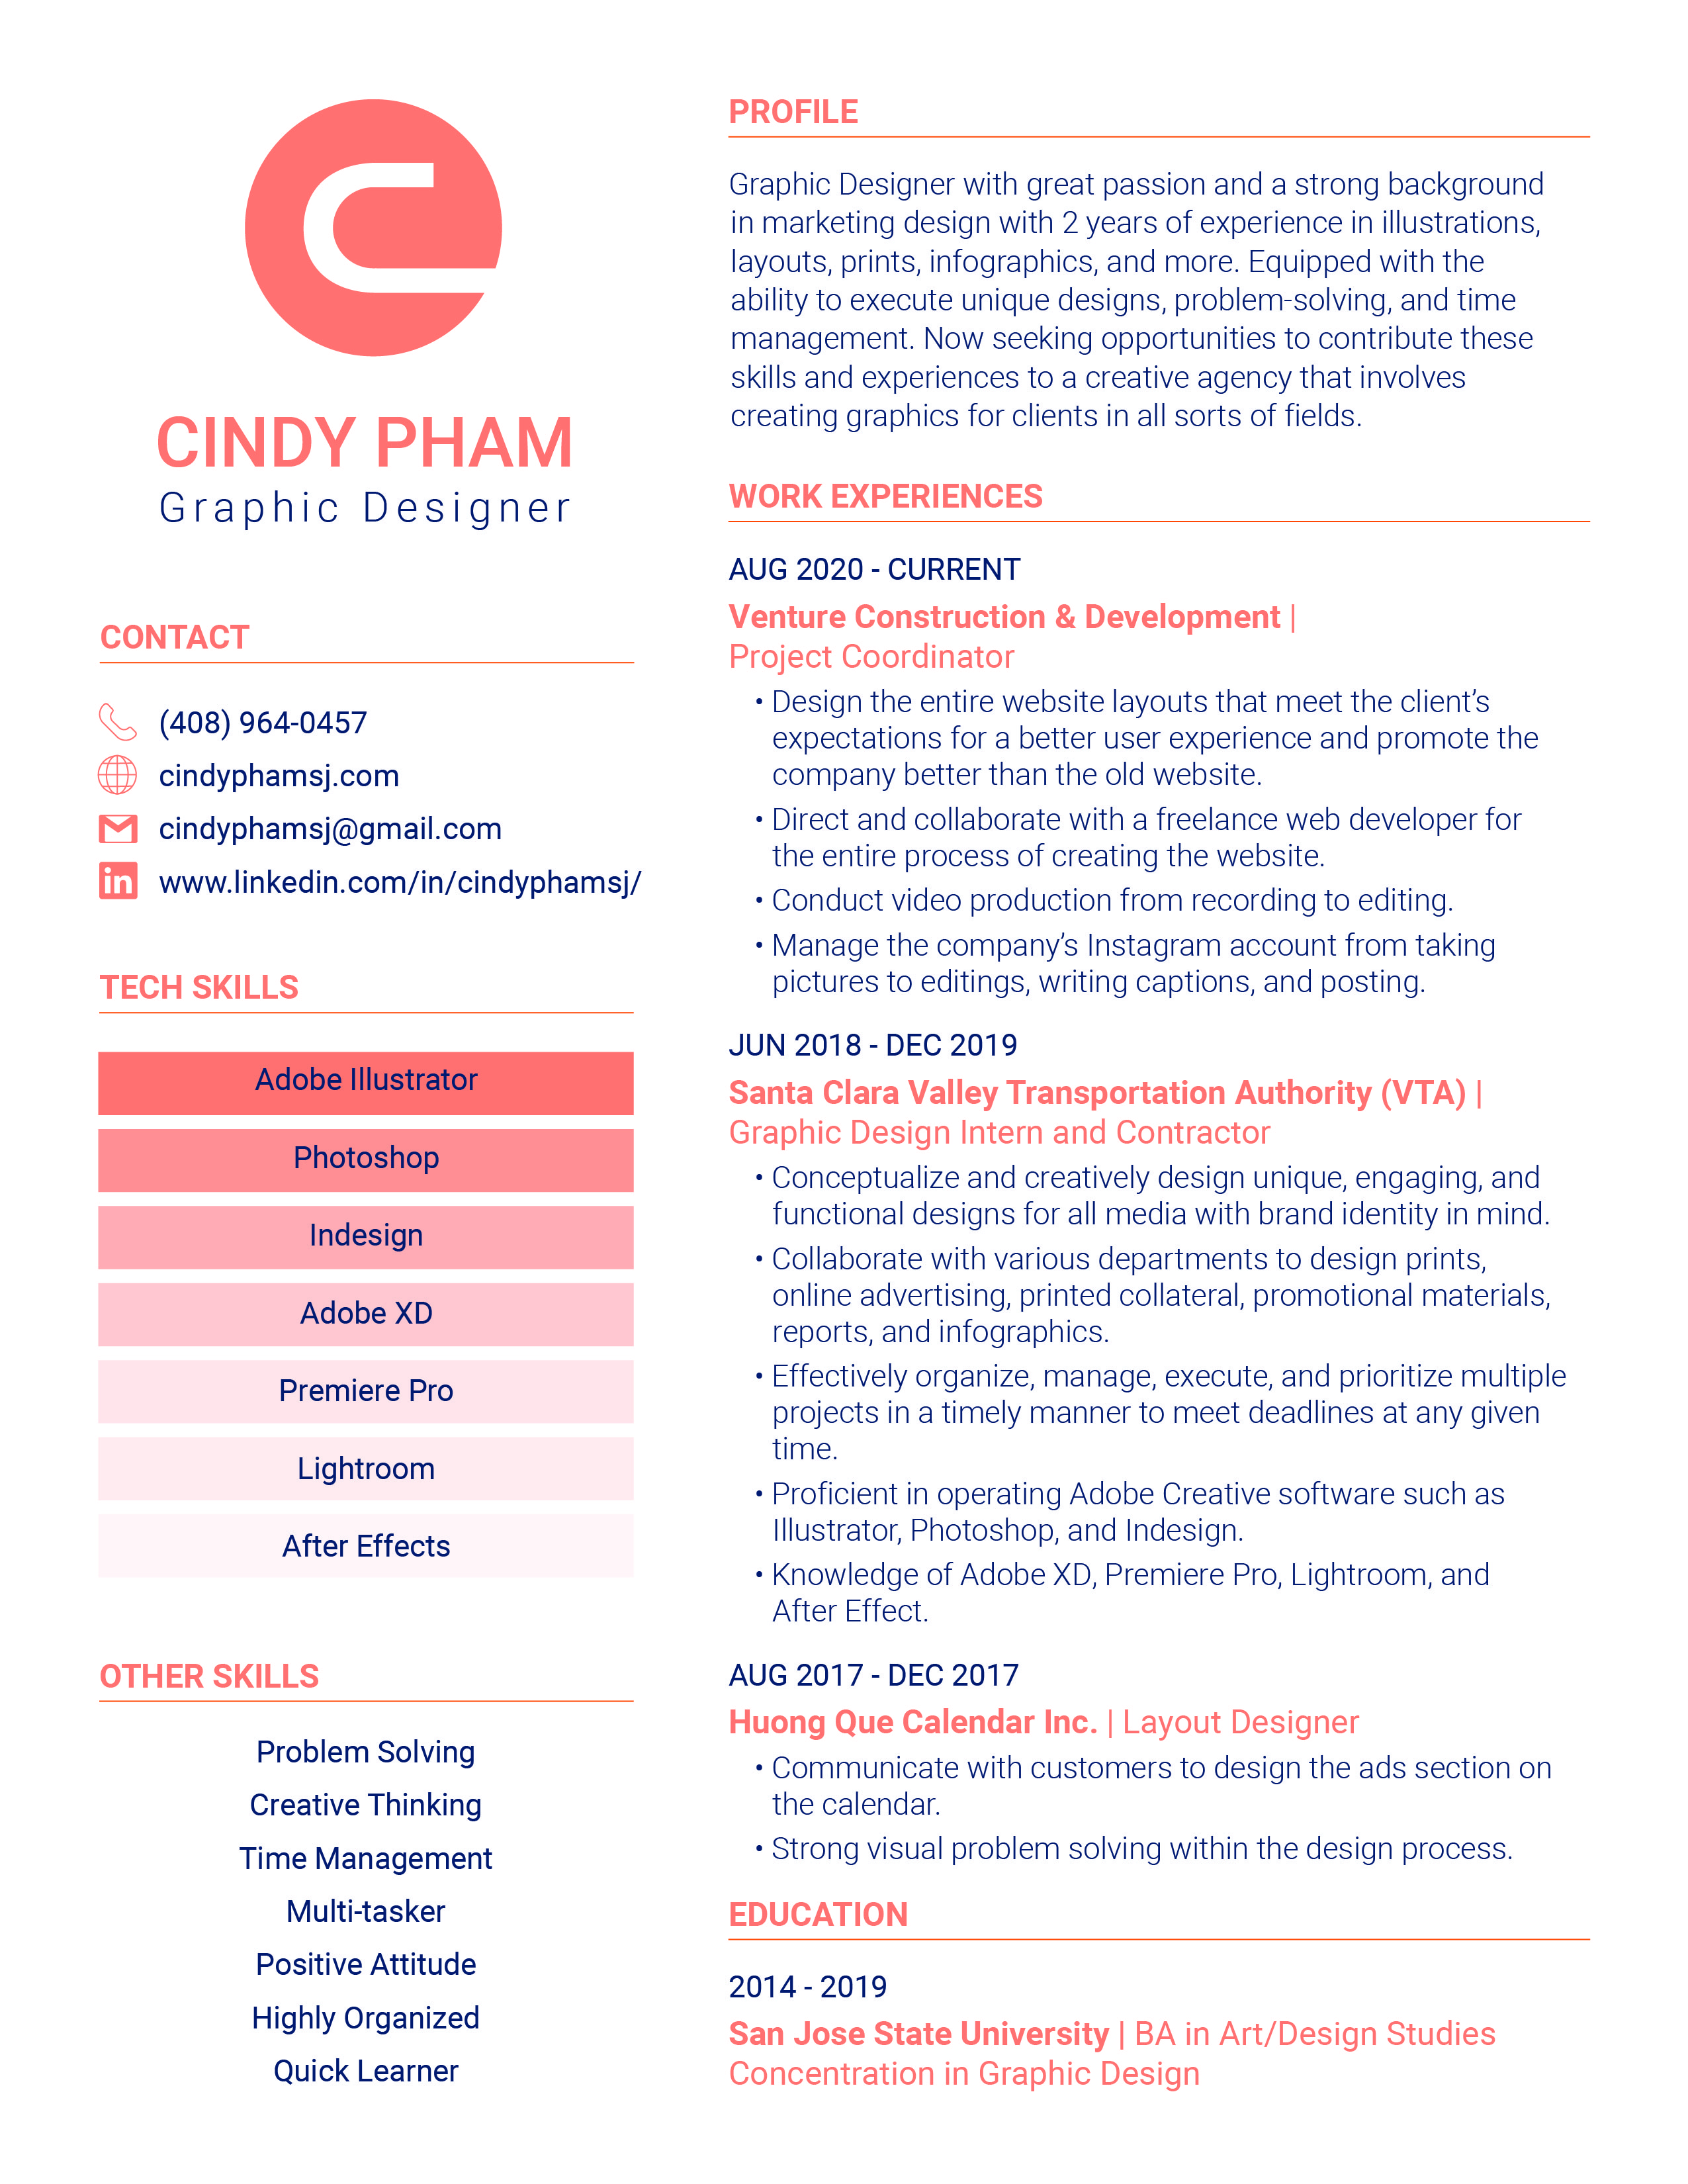 Cindy Pham Resume